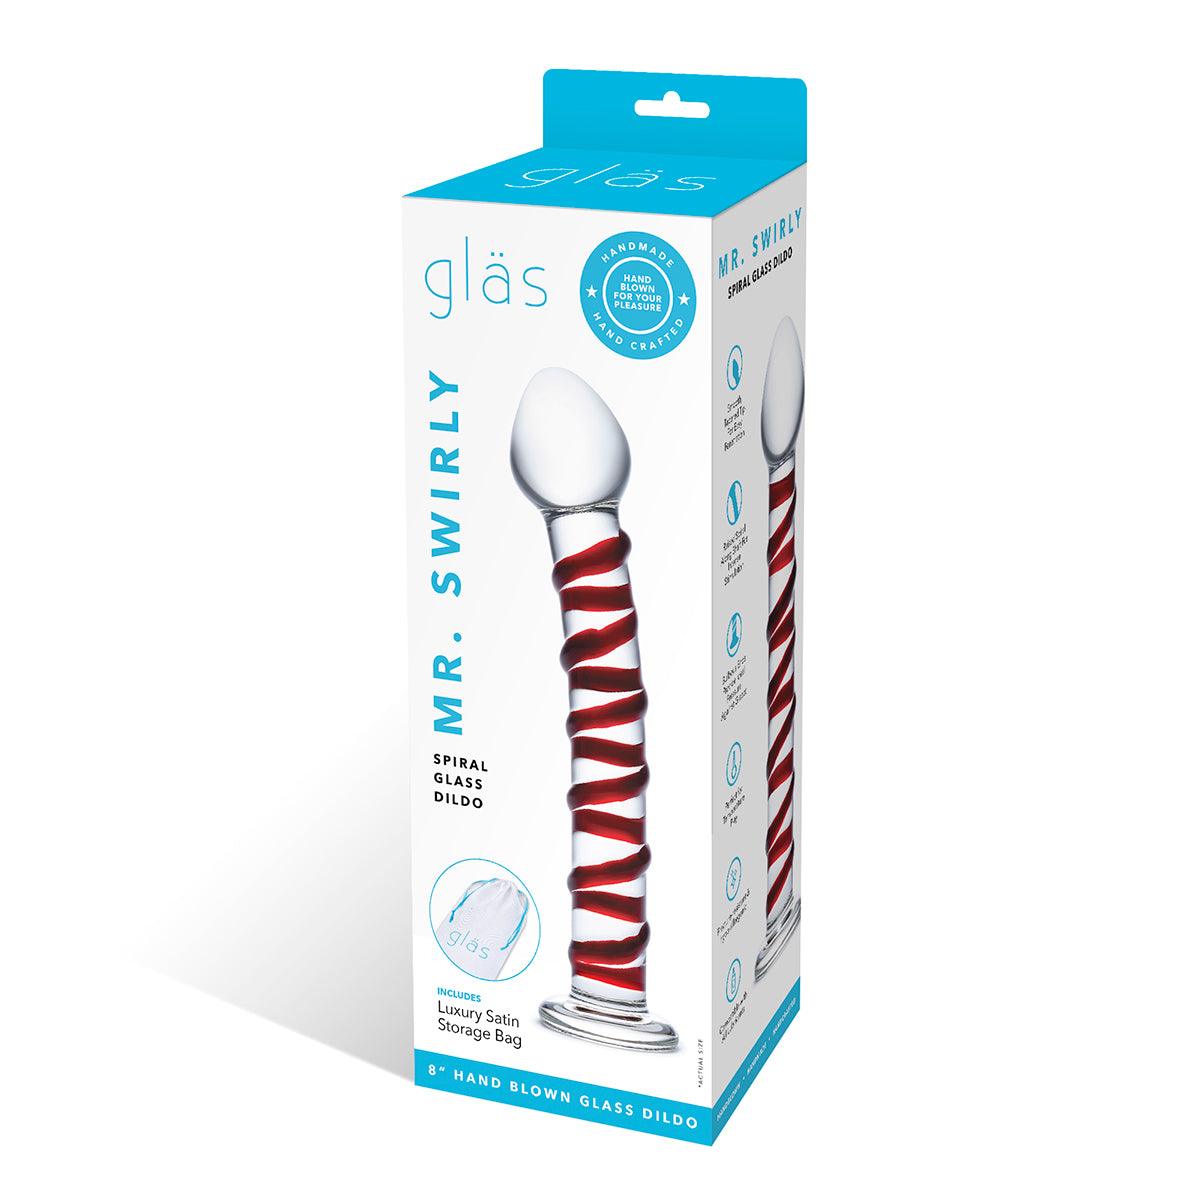 GLAS Mx. Swirly Spiral Glass Dil - shop enby